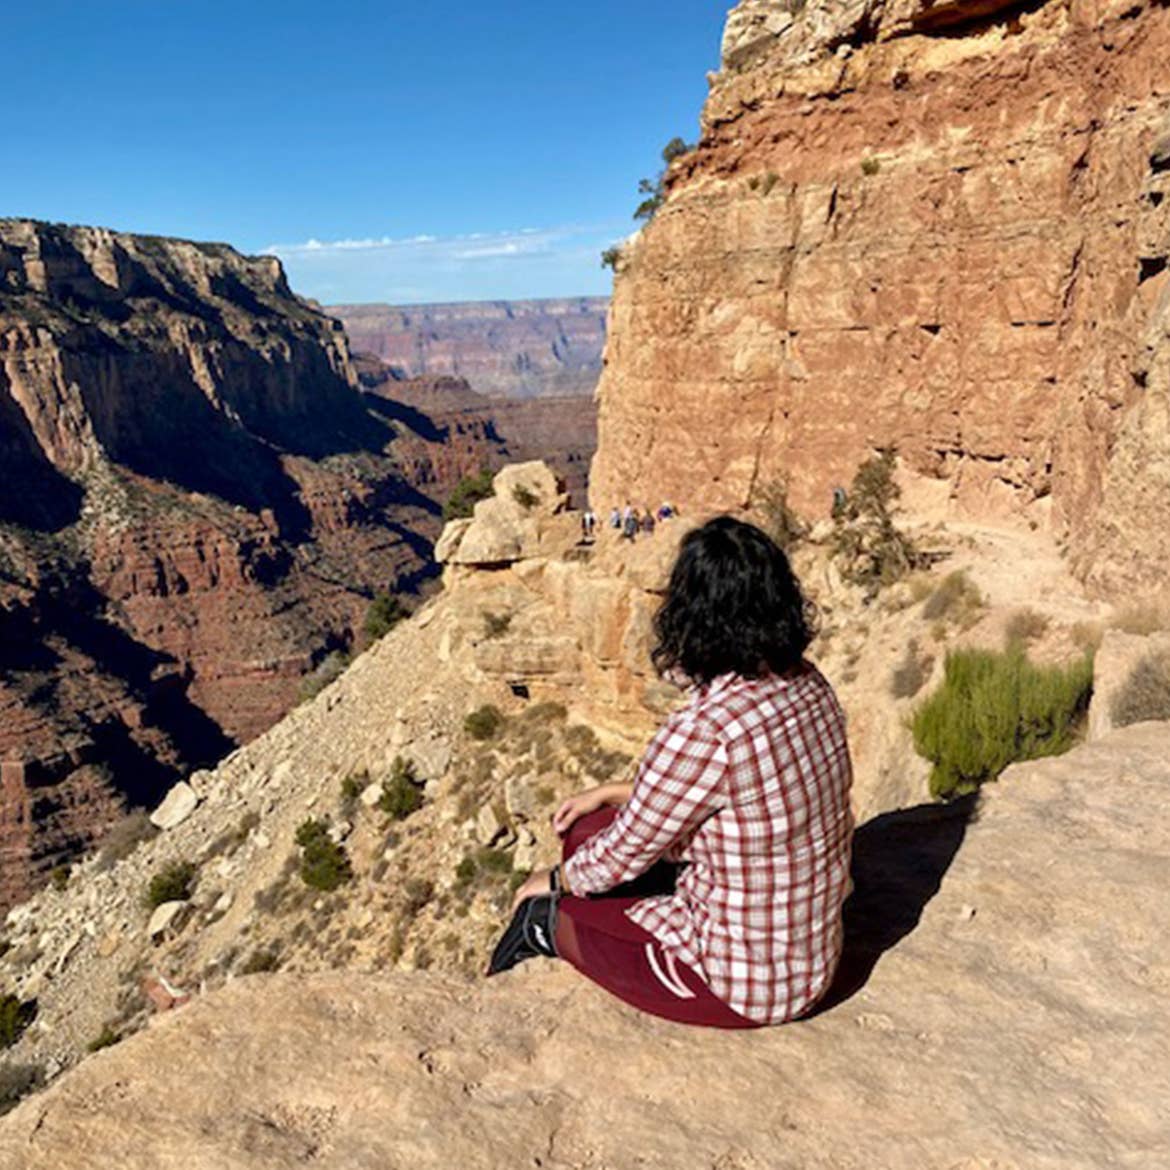 Noemi sits near the edge of the Grand Canyon overlooking the vibrant orange ridges.